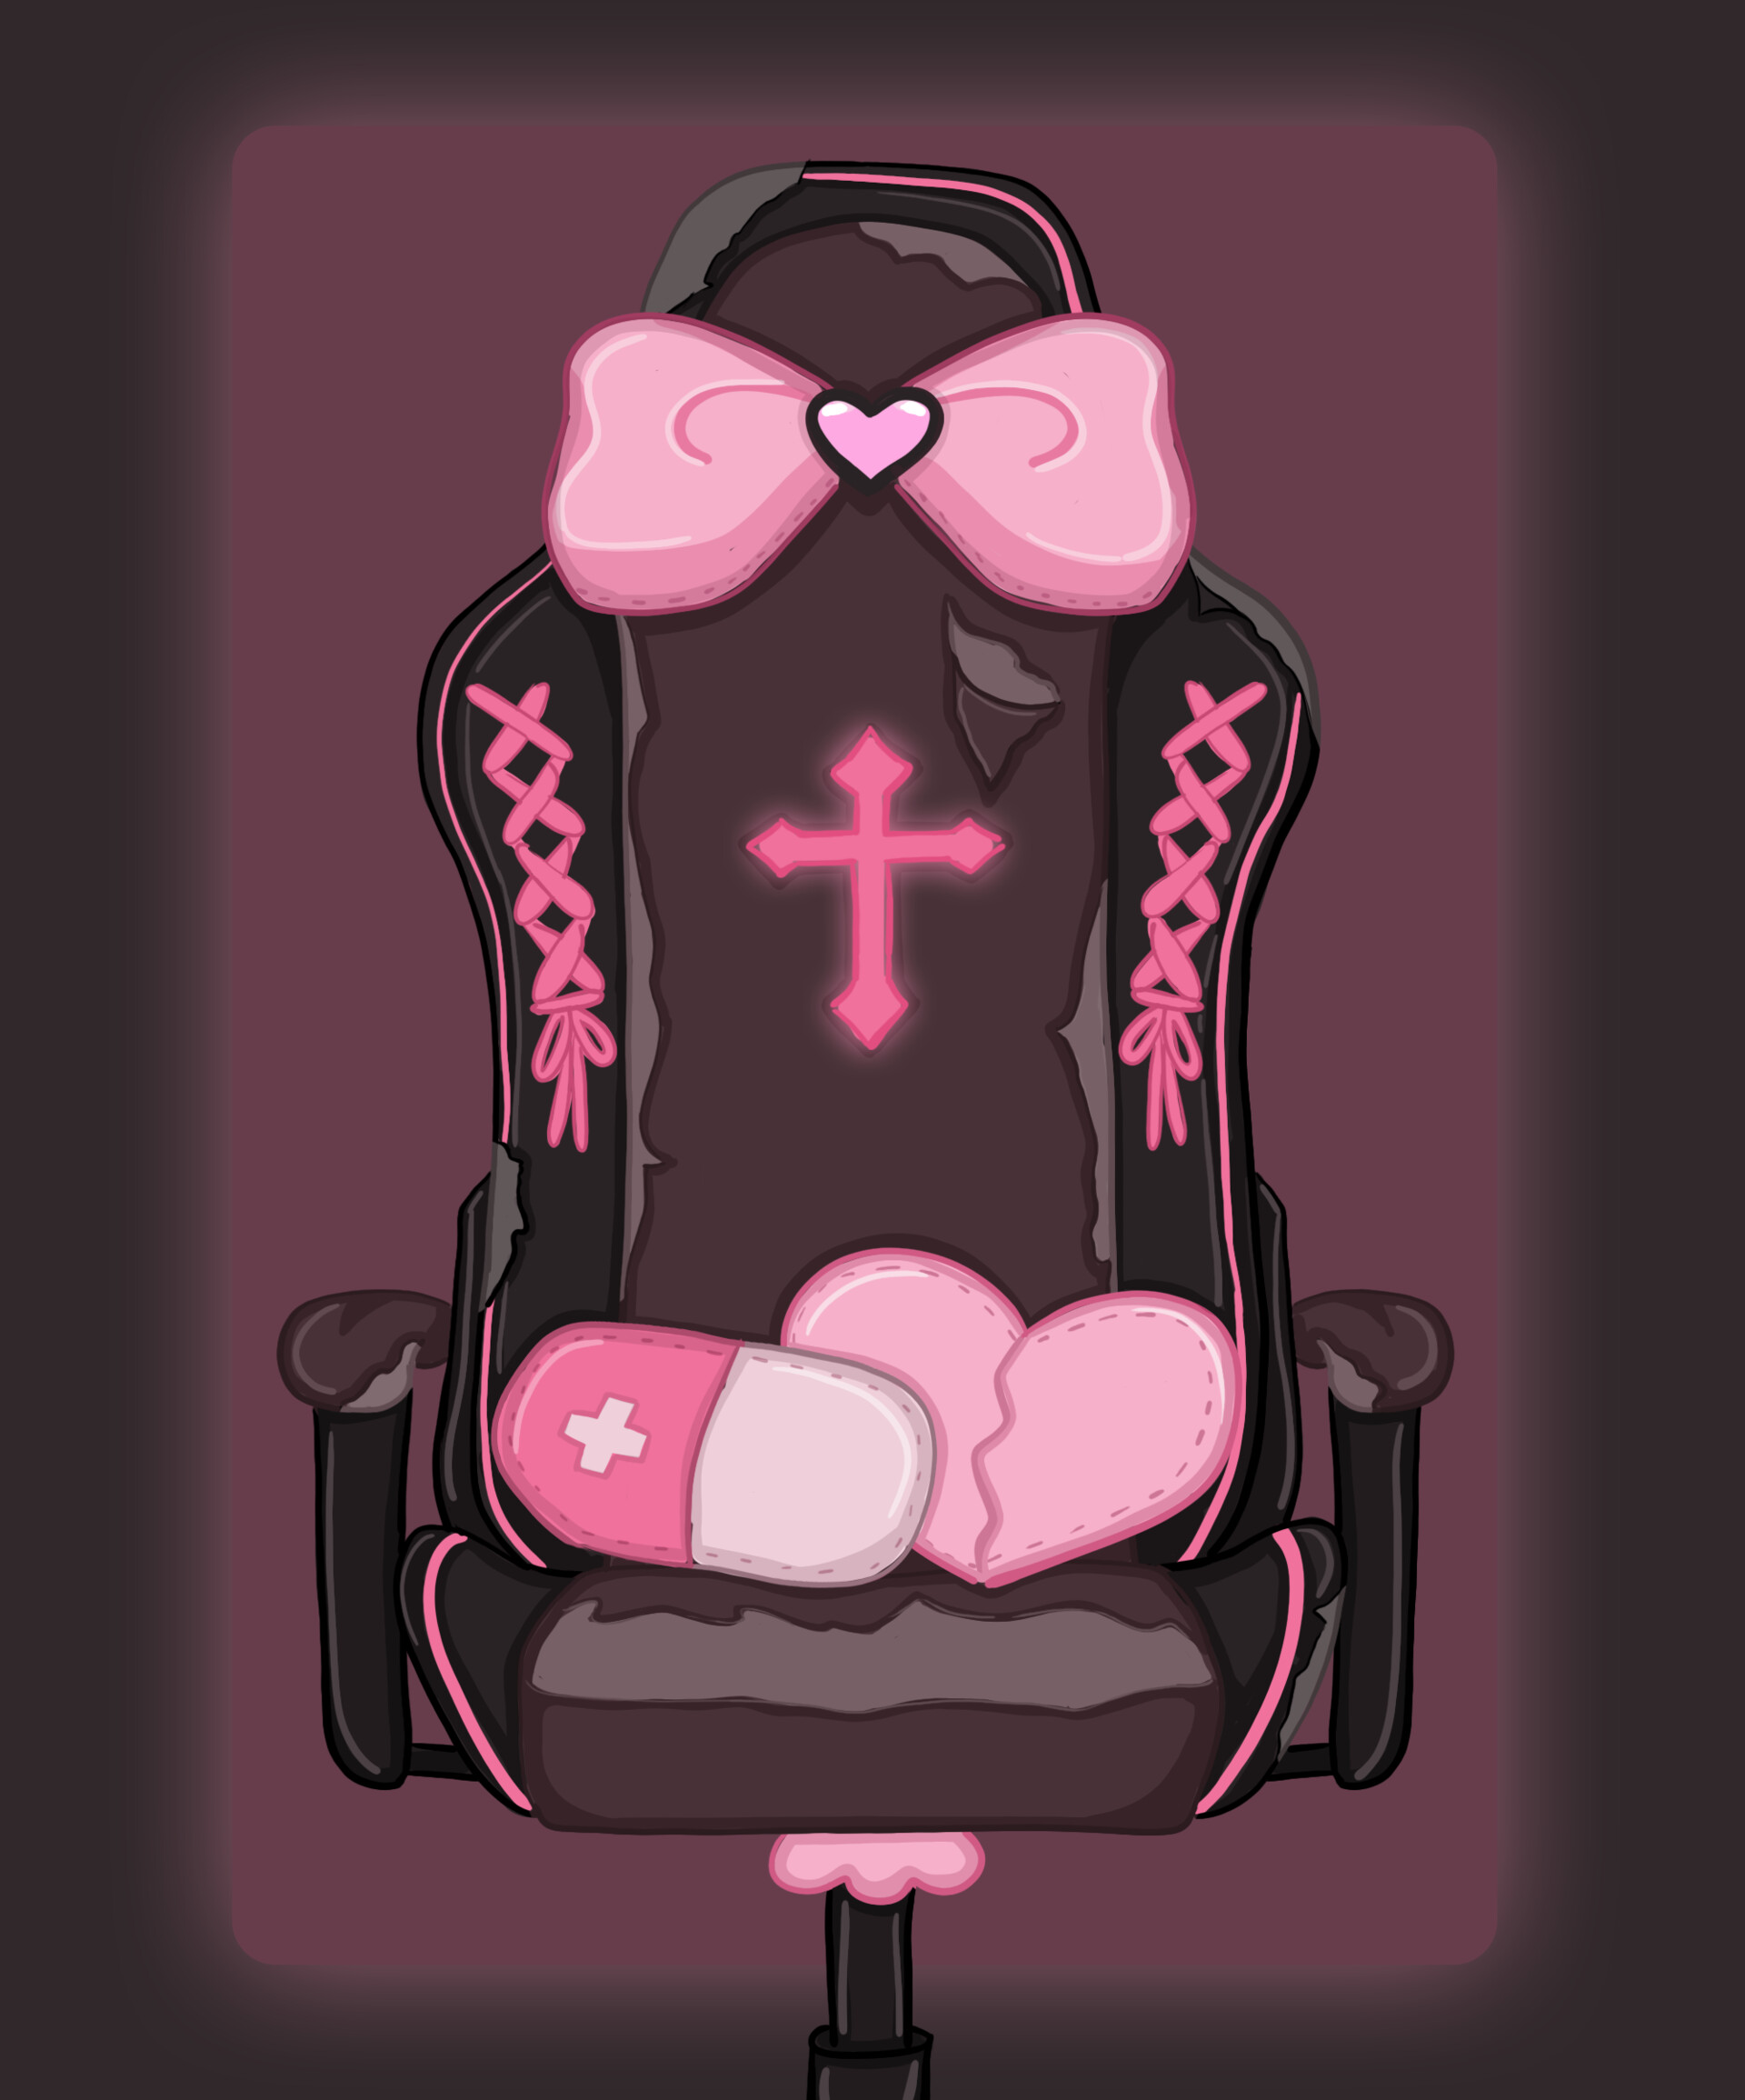 Vtuber Accessory Cute Gaming Chair Vtuber Streamer Asset Pink Cute